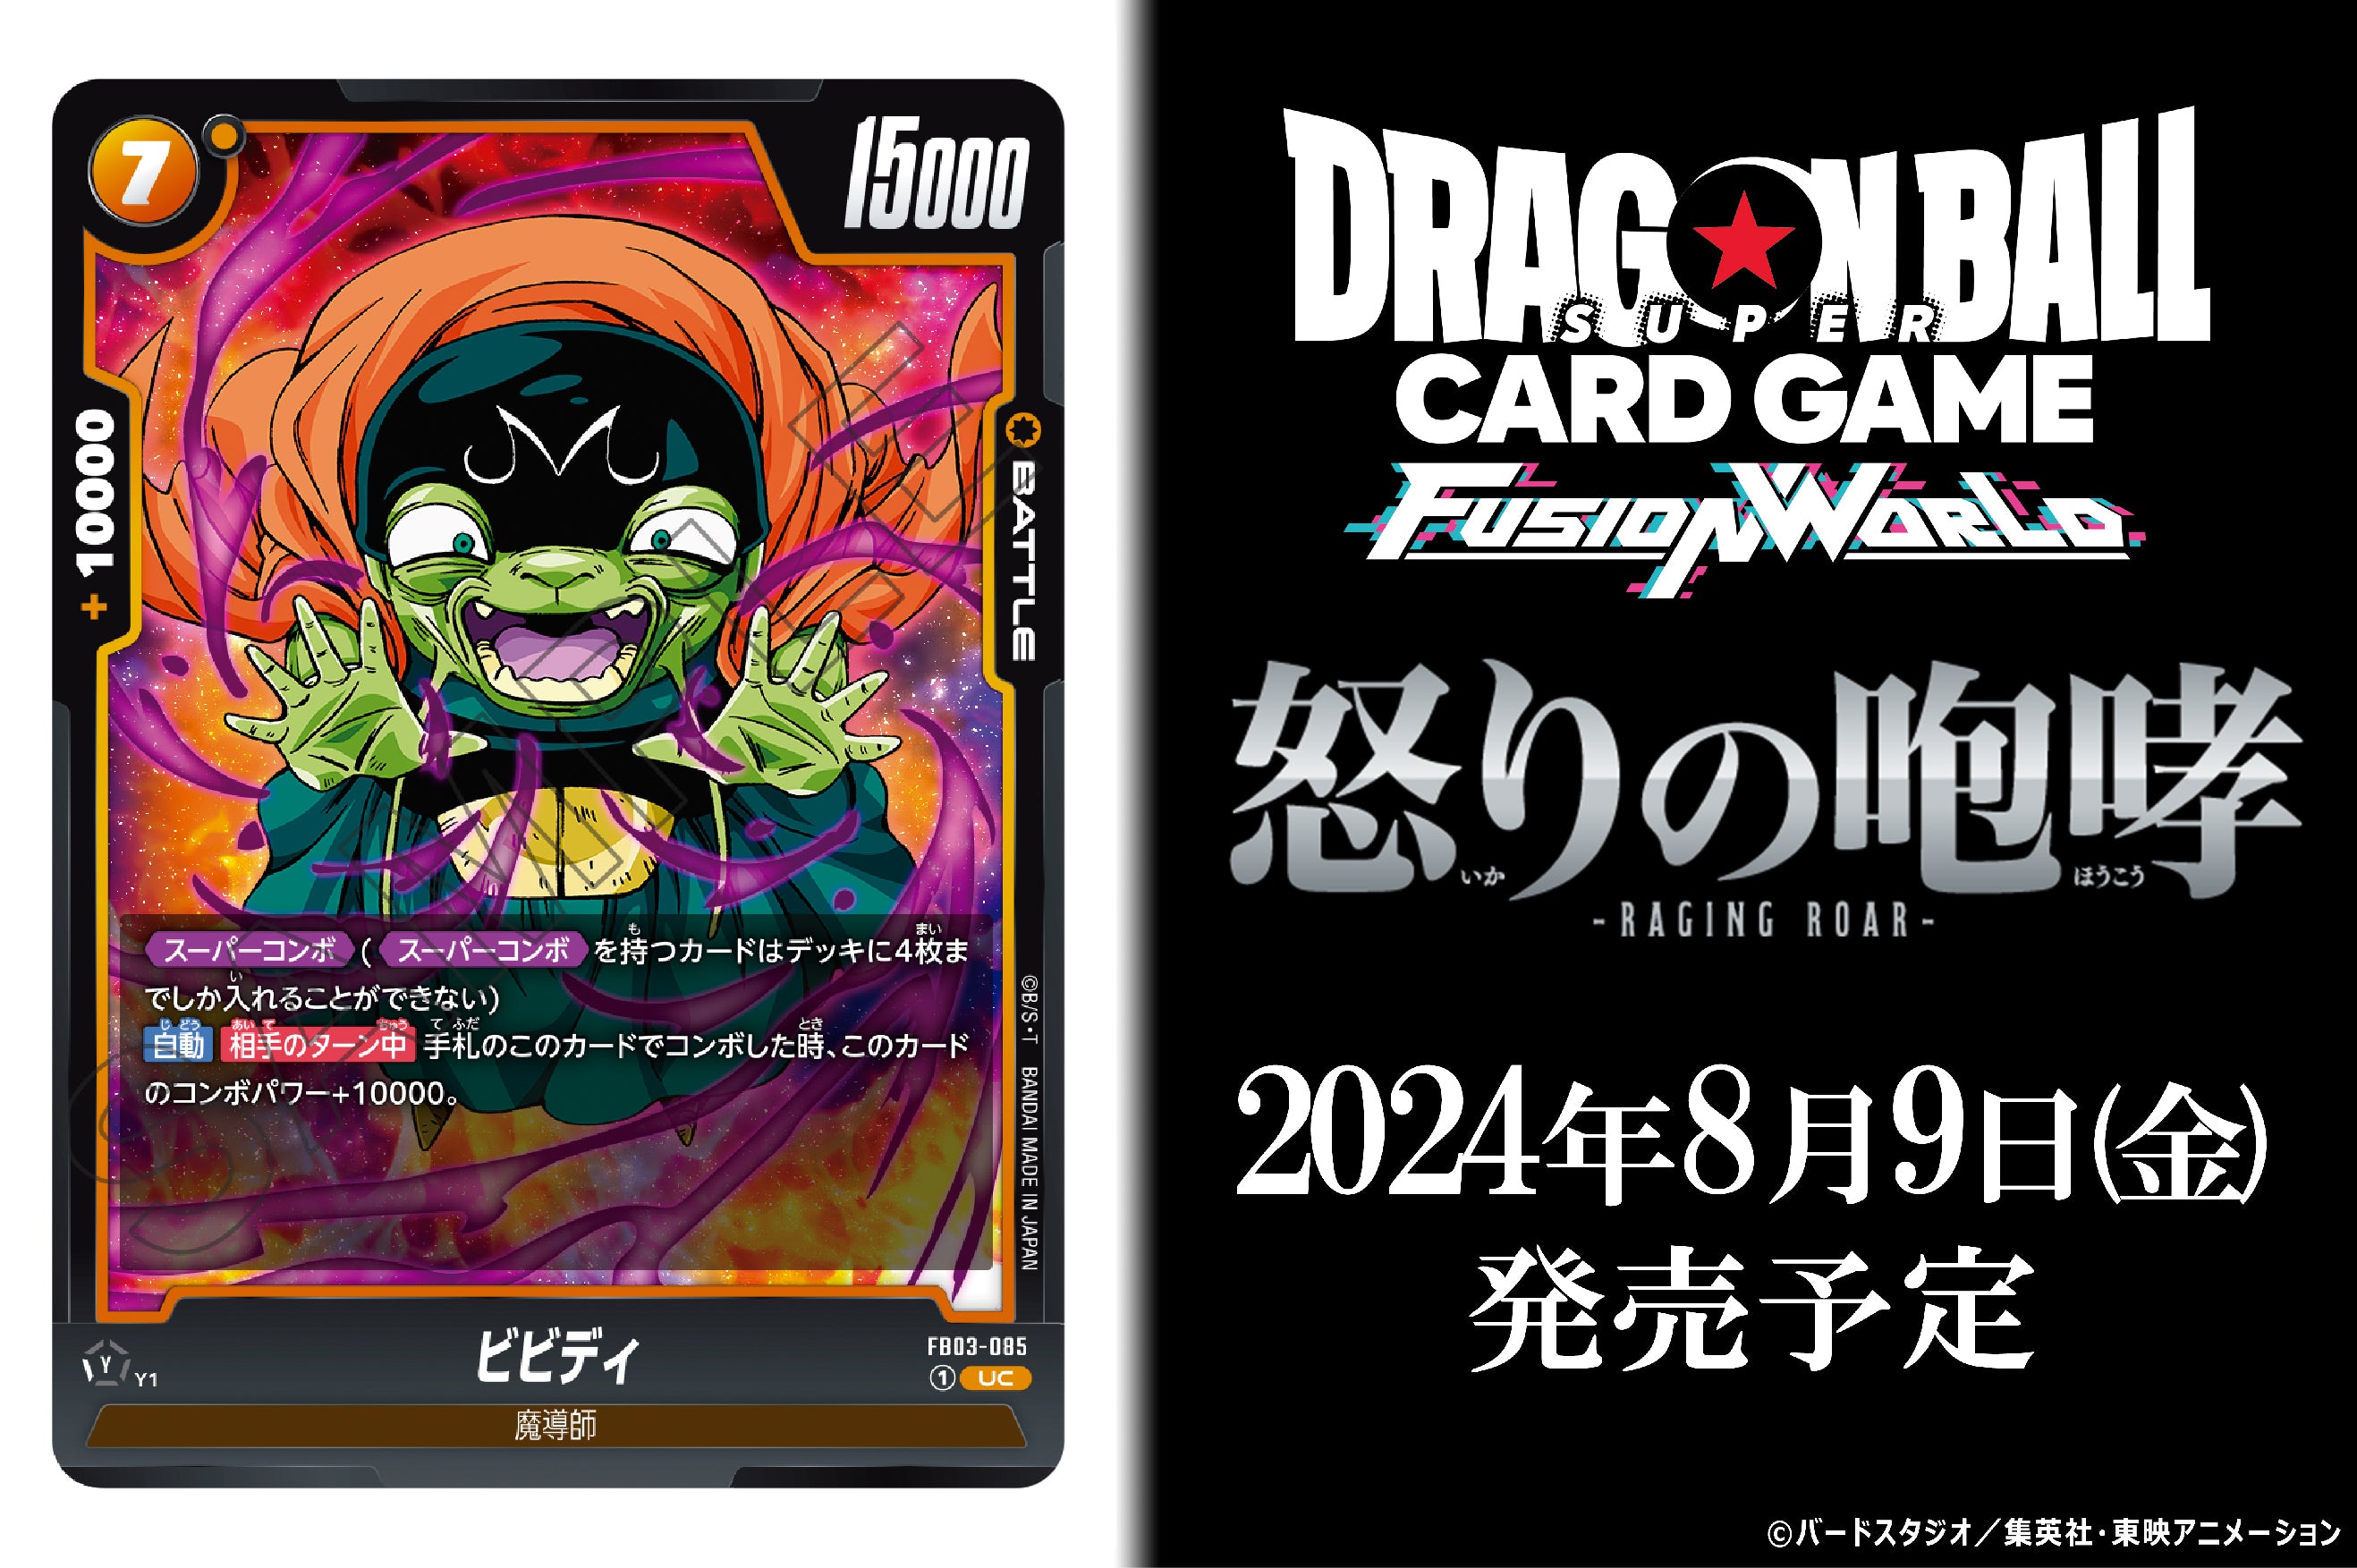 DRAGON BALL SUPER CARD GAME FUSION WORLD RAGING ROAR - FB03 [BOX]